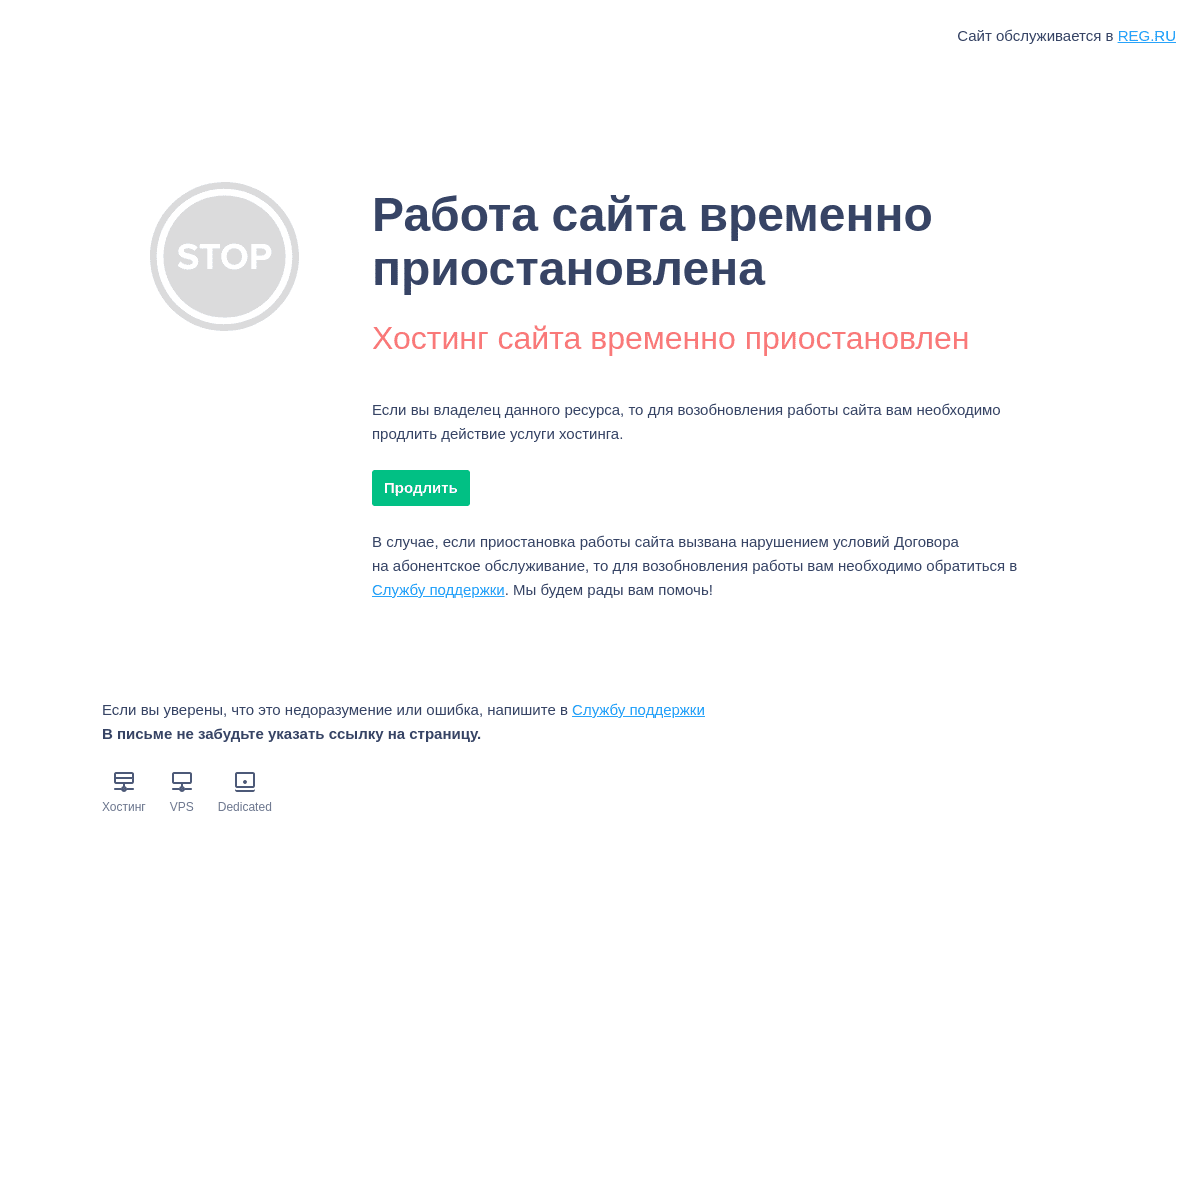 A complete backup of https://fayar.com.ua